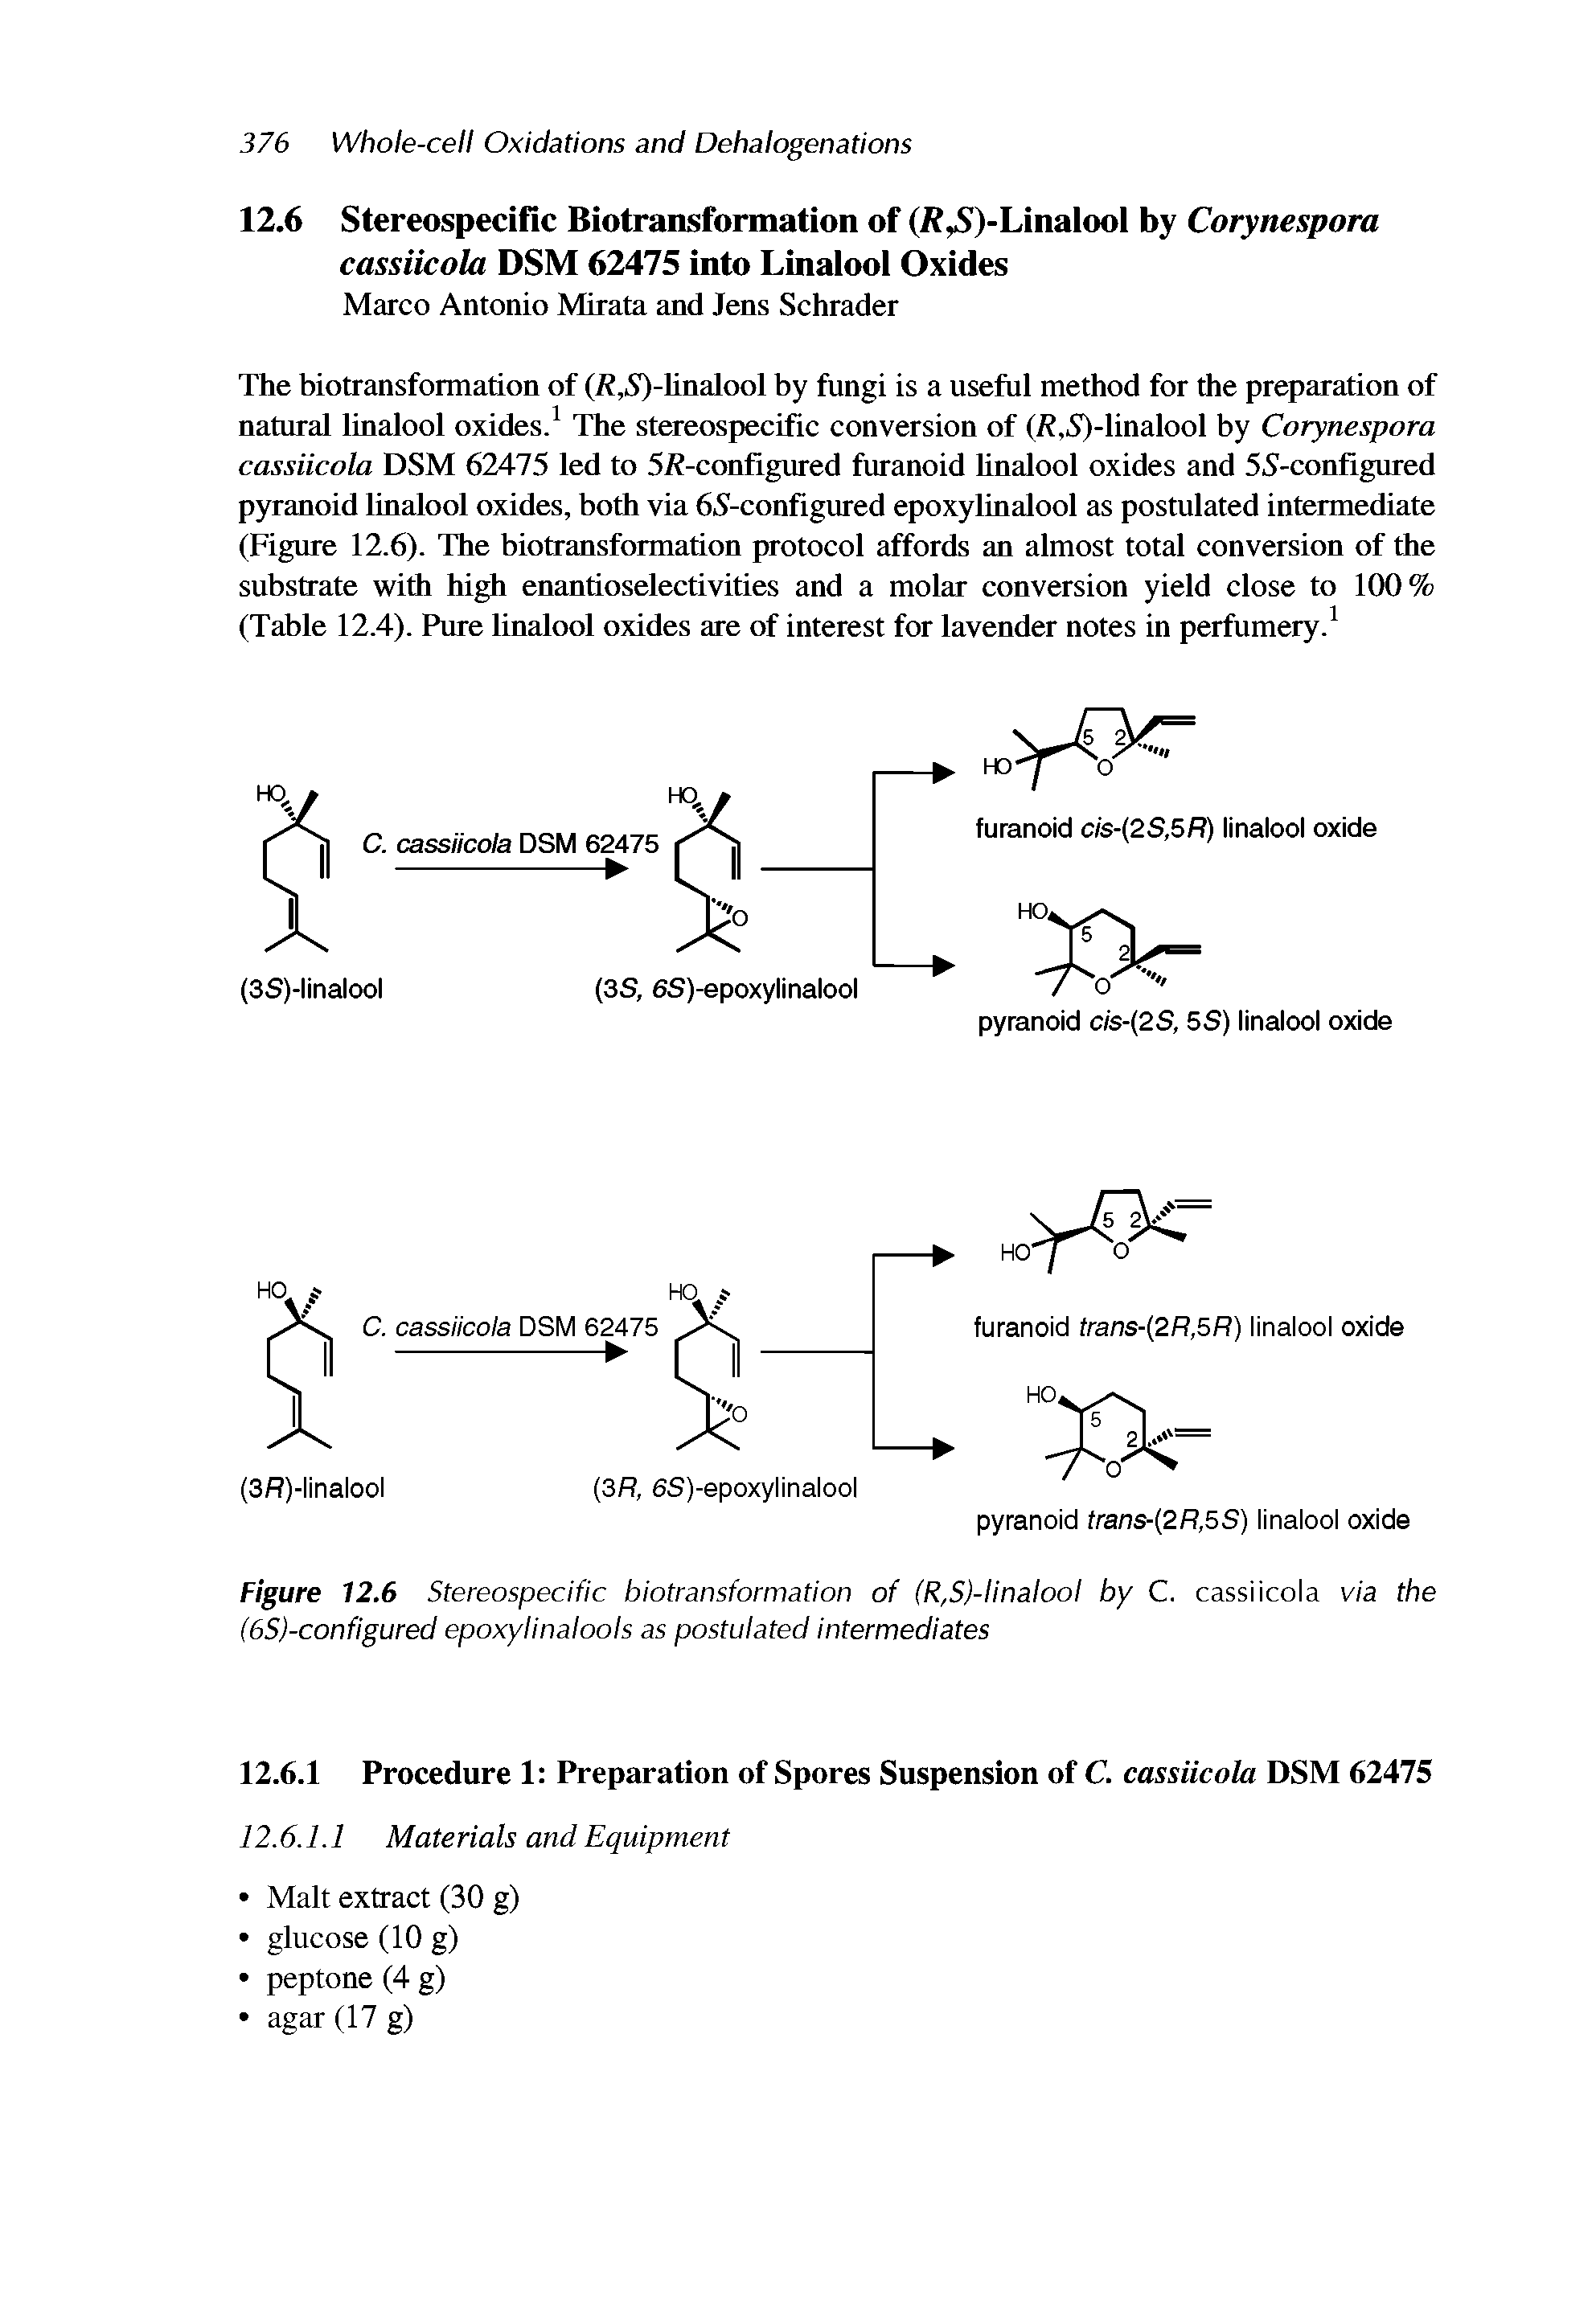 Figure 12.6 Stereospecific biotransformation of (R,S)-linalool by C. cassiicola via the (6S)-configured epoxylinalools as postulated intermediates...